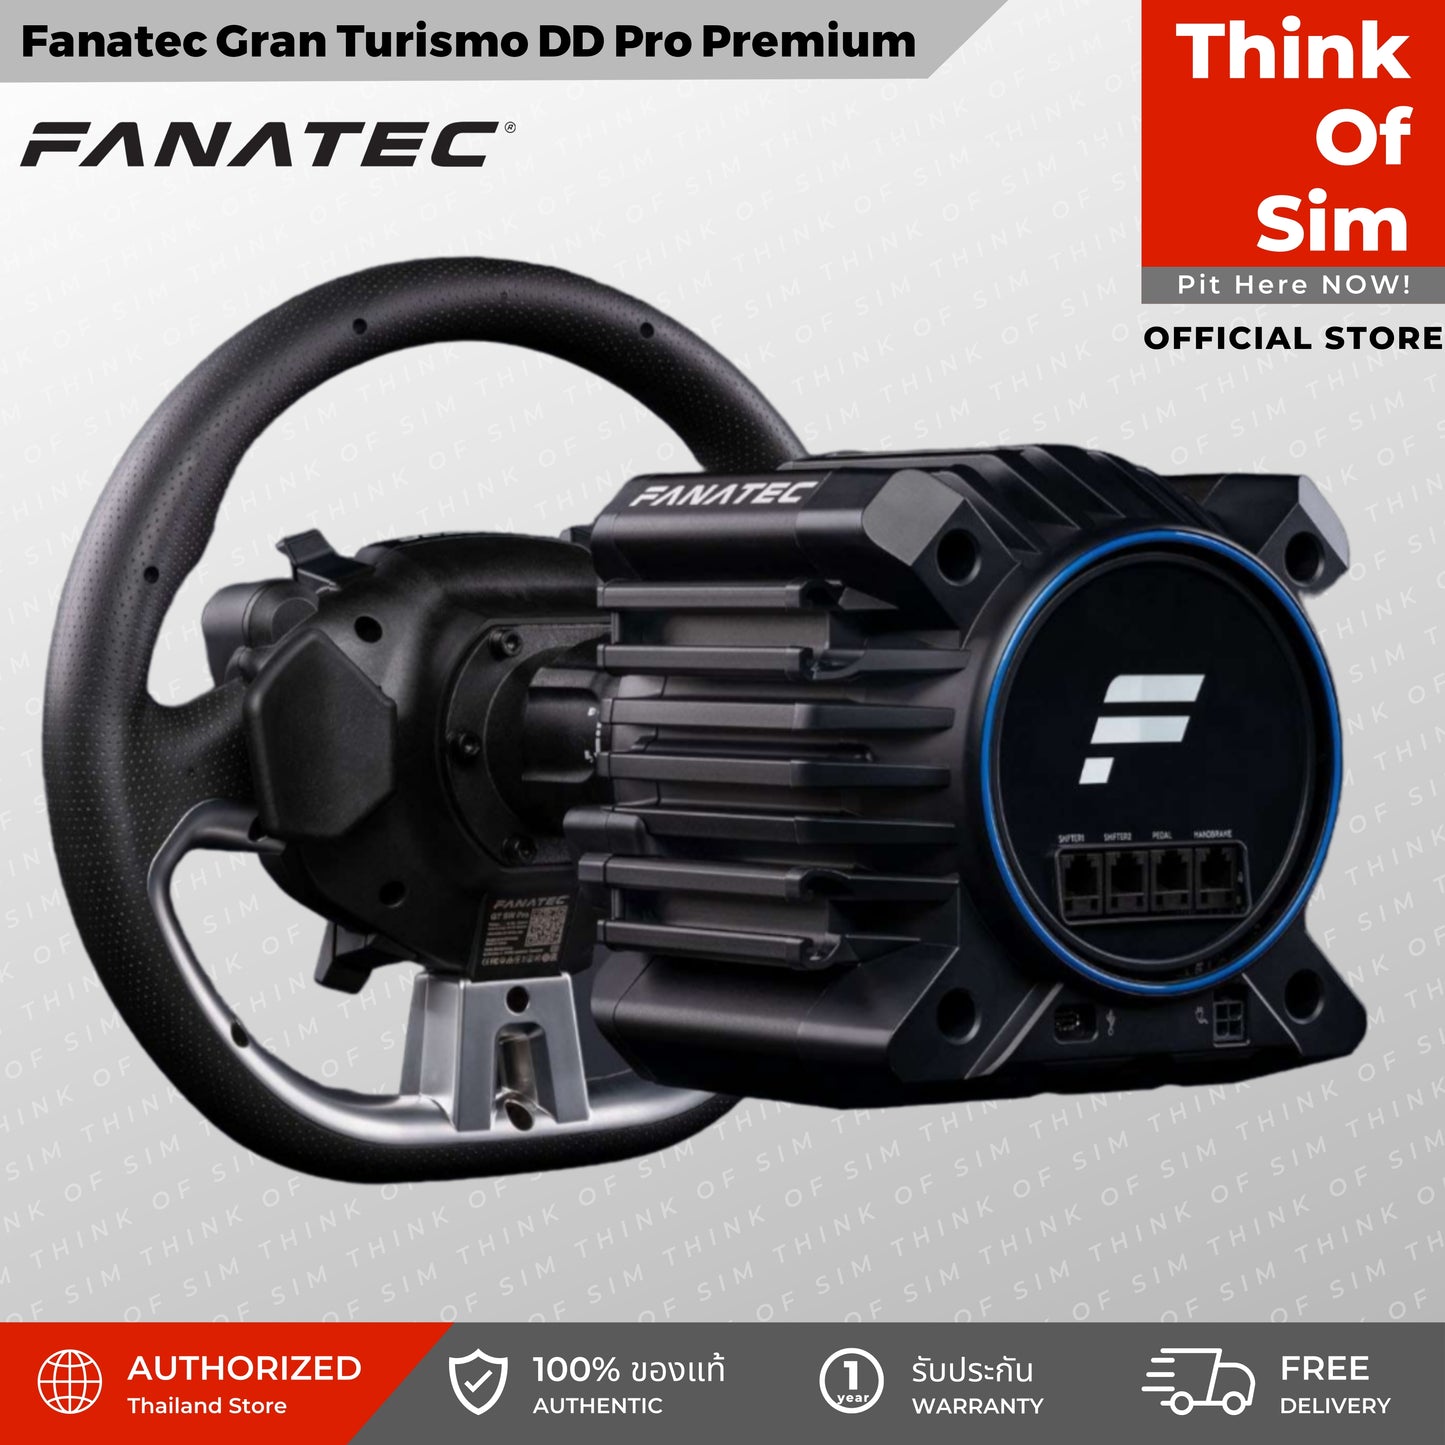 Fanatec Gran Turismo DD Pro Premium Bundle (8Nm) Complete